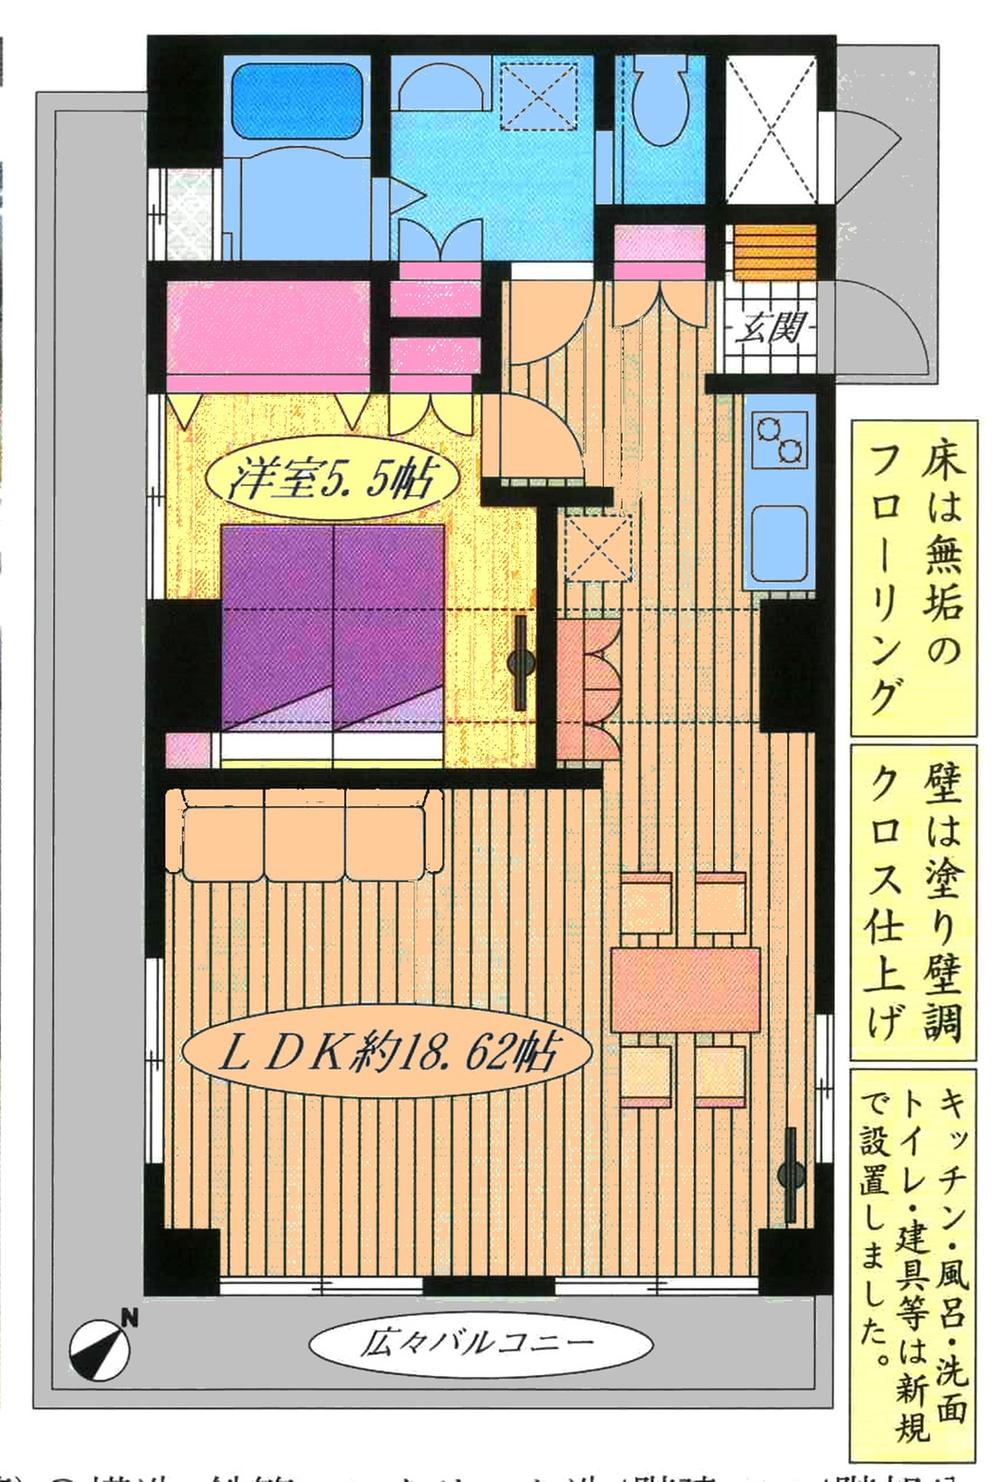 Floor plan. 1LDK, Price 8.9 million yen, Occupied area 51.08 sq m , Balcony area 14.5 sq m